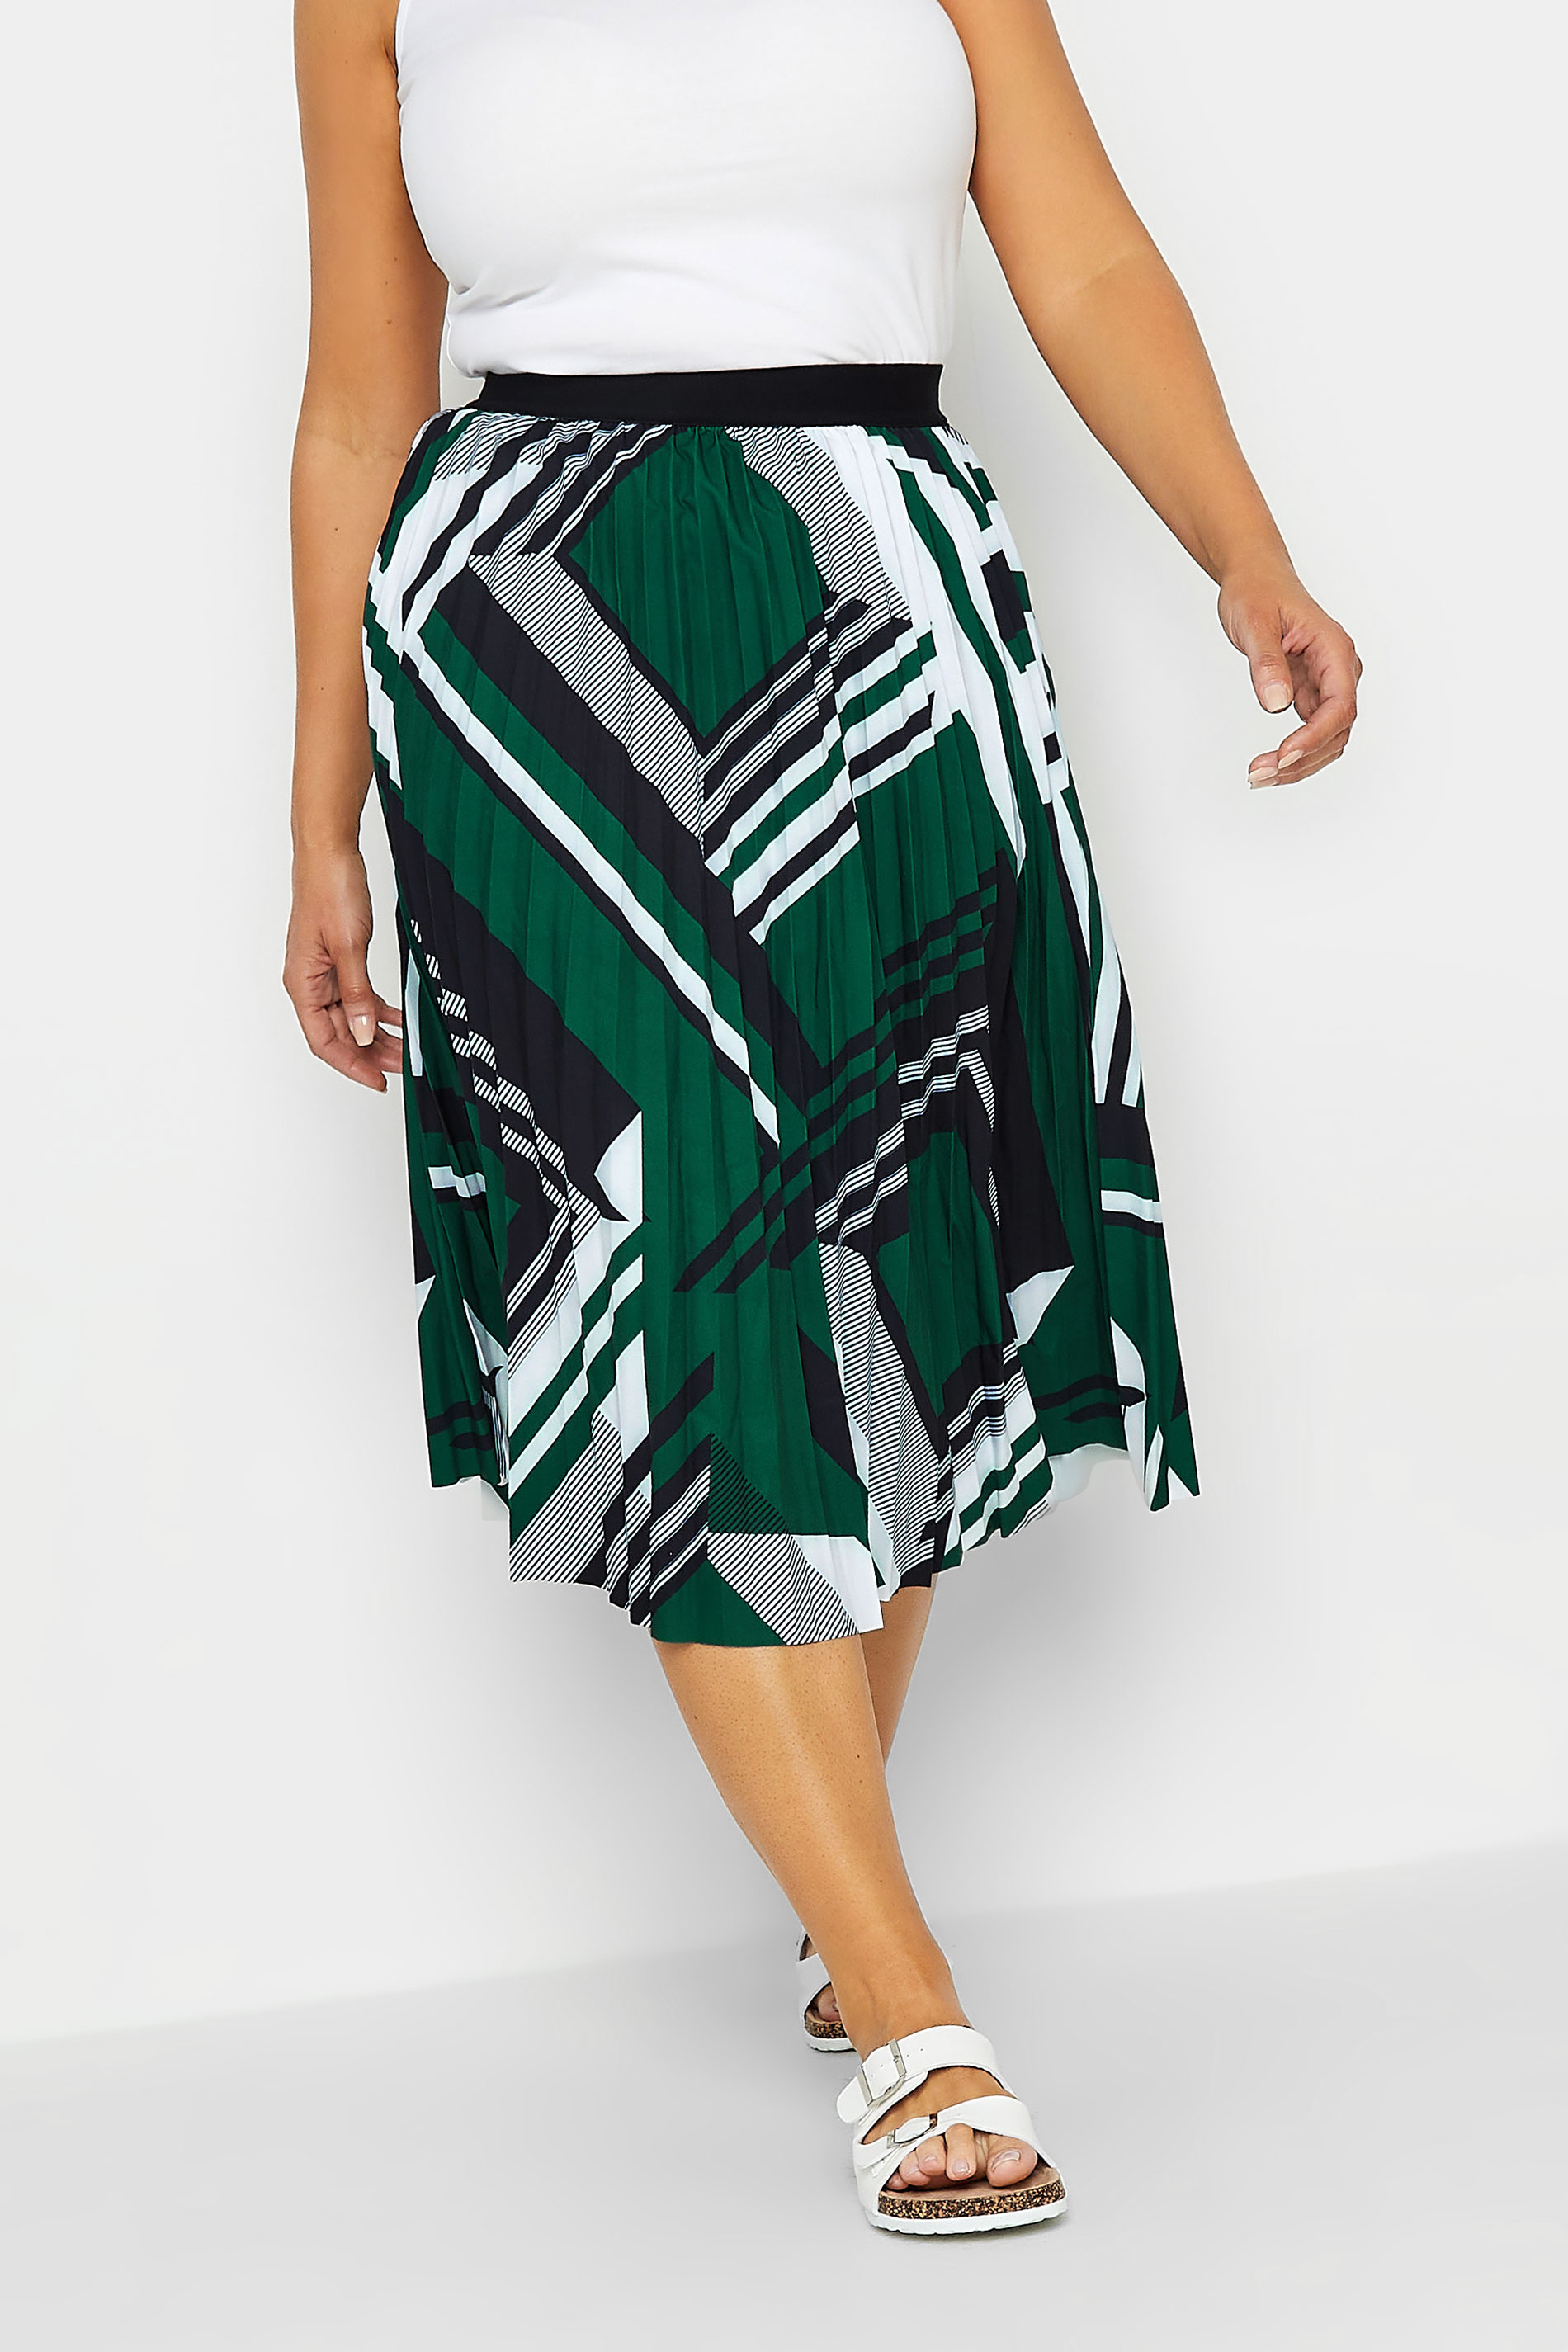 M&Co Green Geometric Print Pleated Midi Skirt | M&Co 1